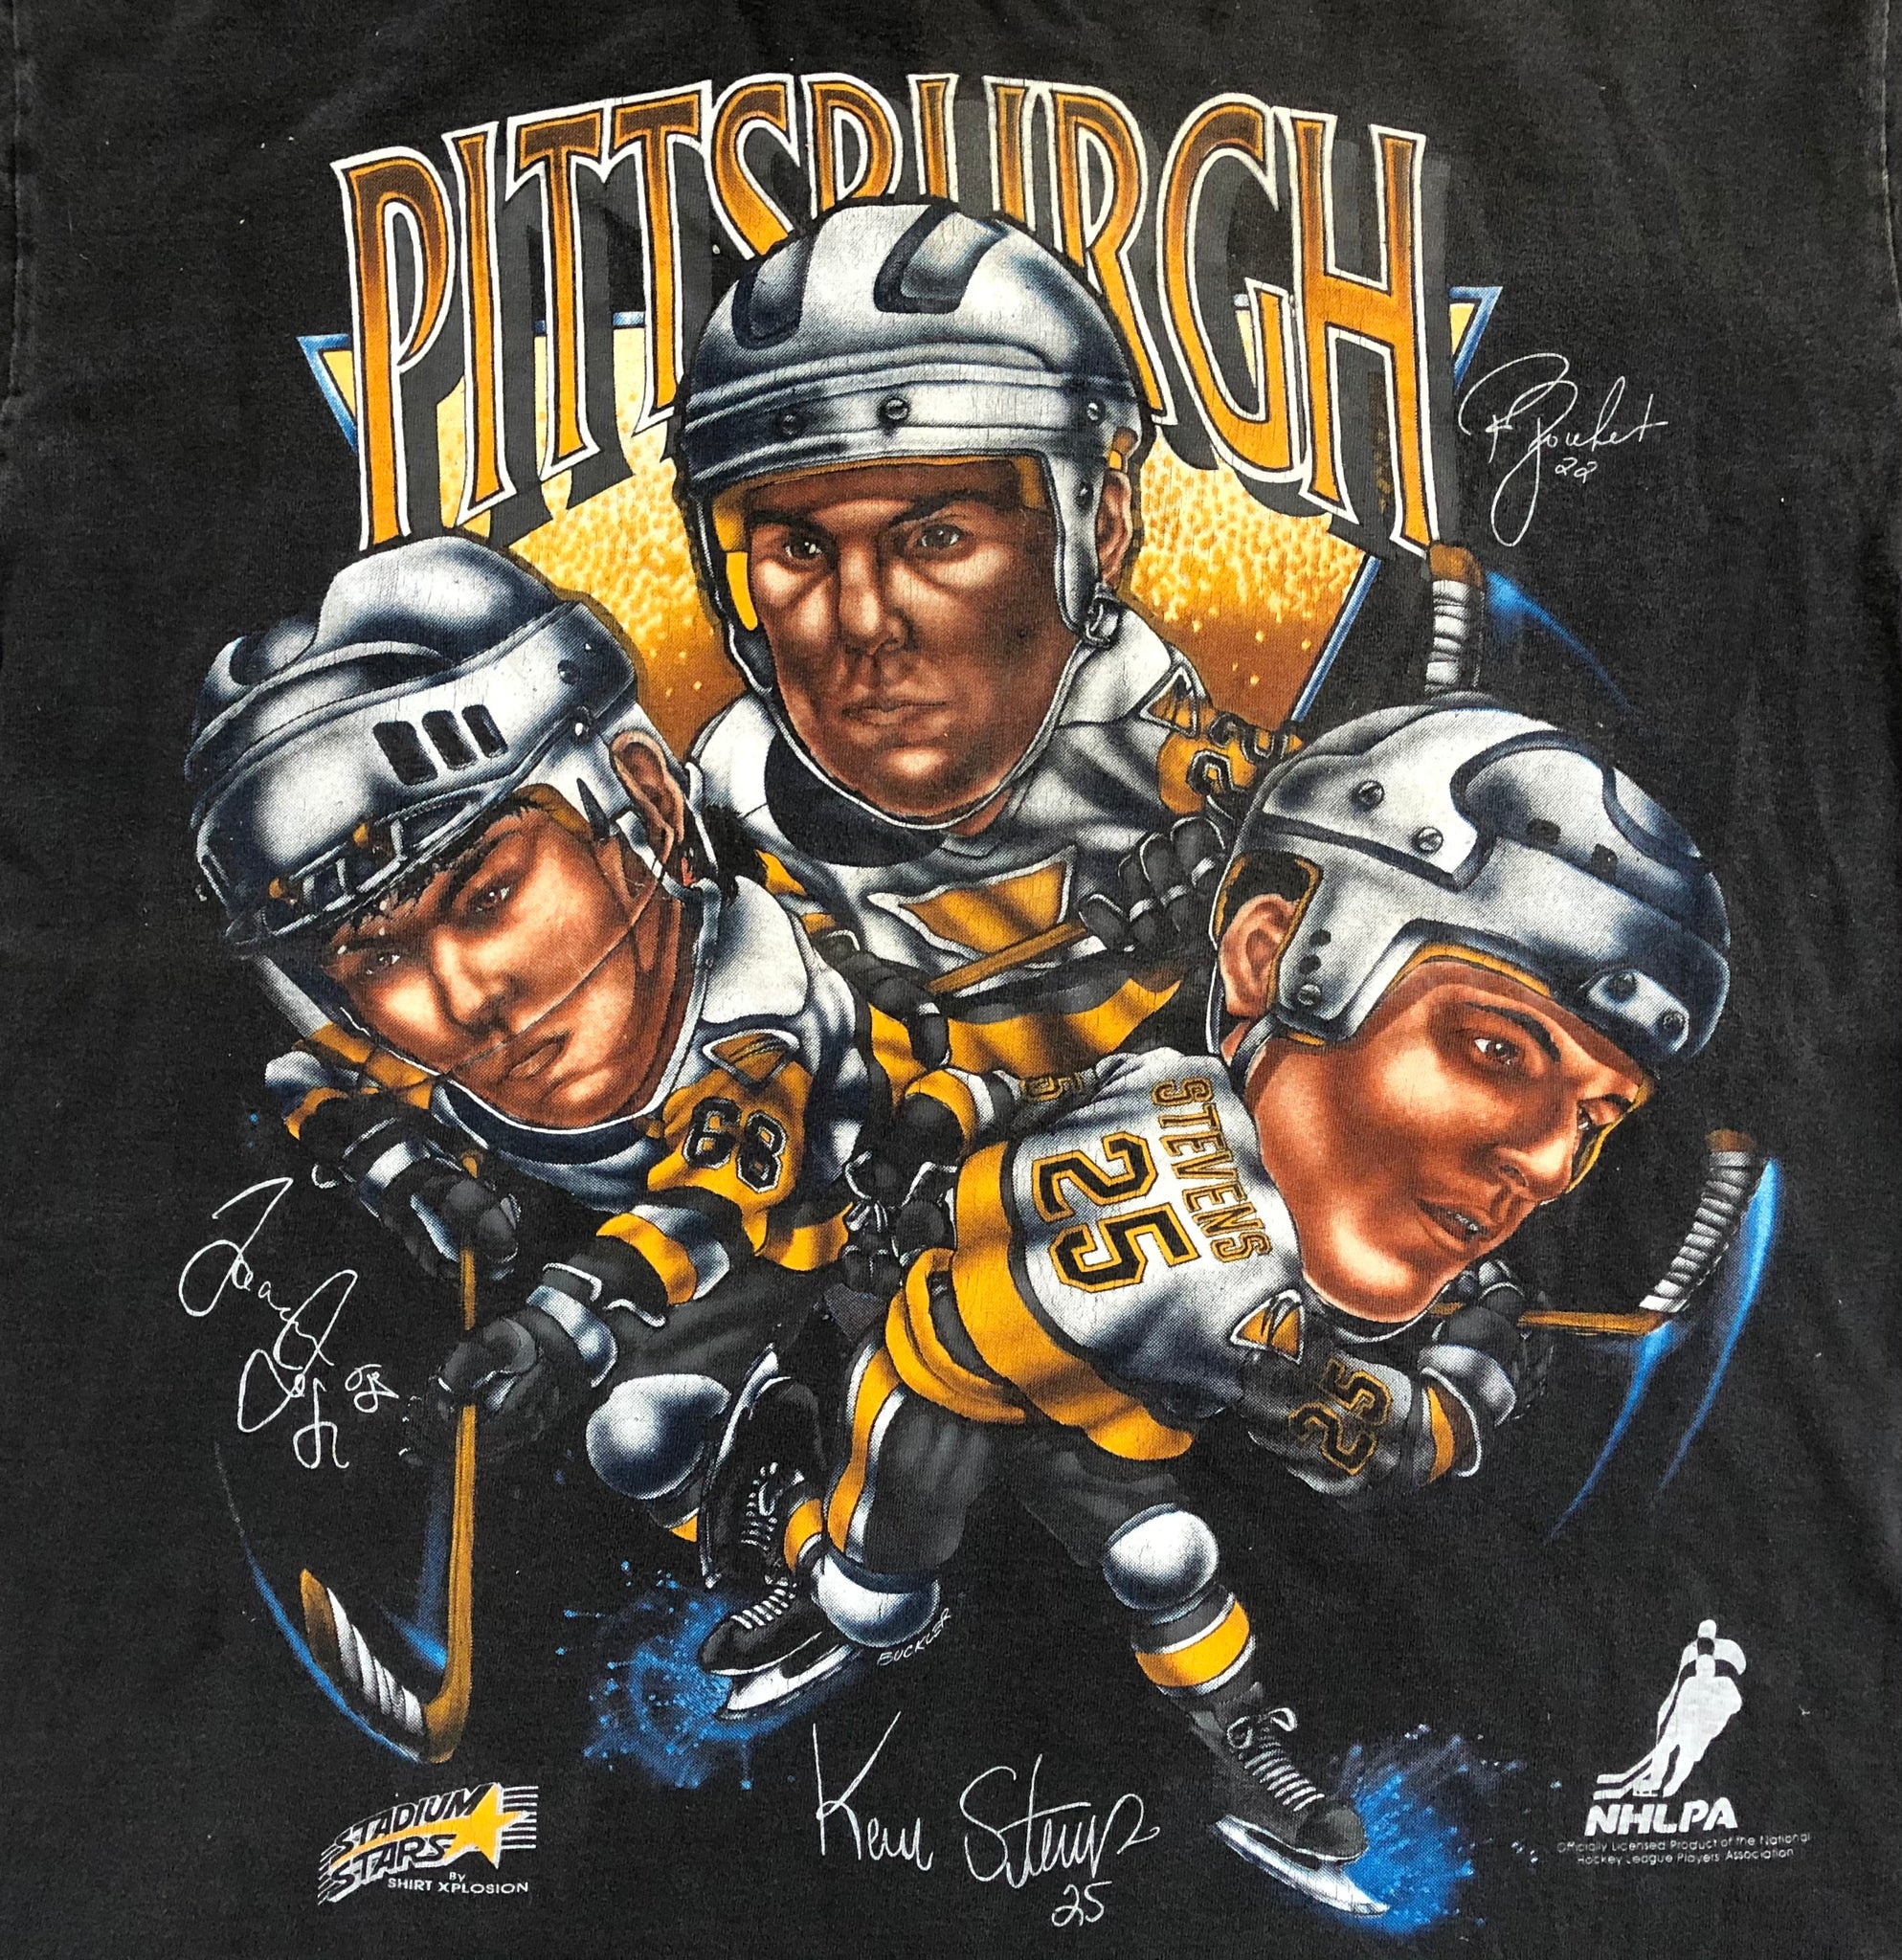 Vintage Pittsburgh Penguins Sweatshirt Size Large 1990s 